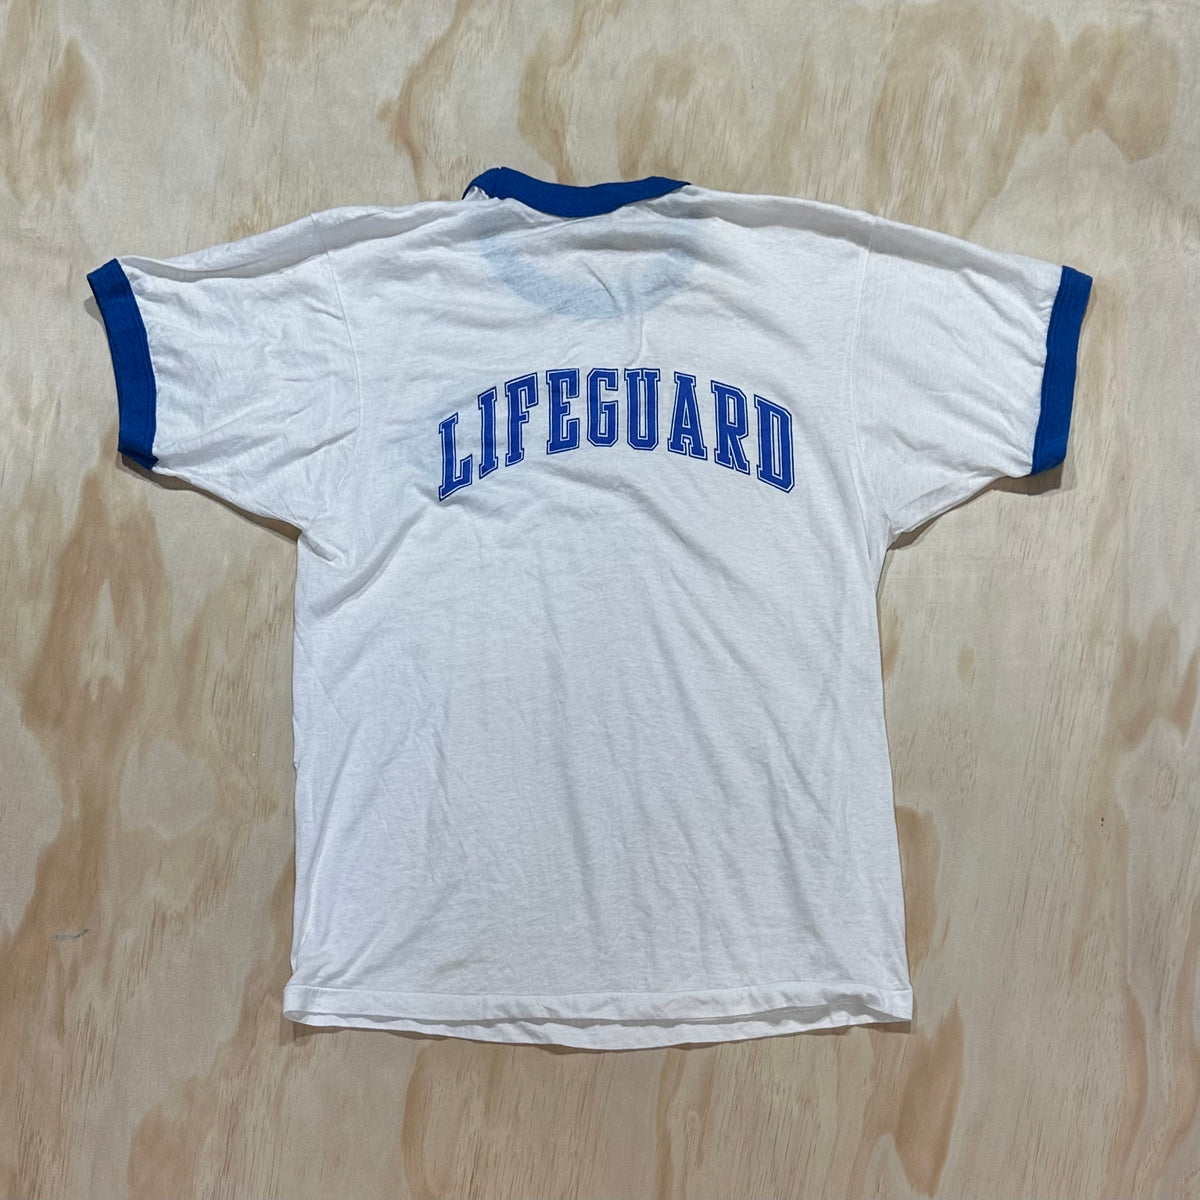 Vintage MVF Aquatic Staff Lifeguard shirt